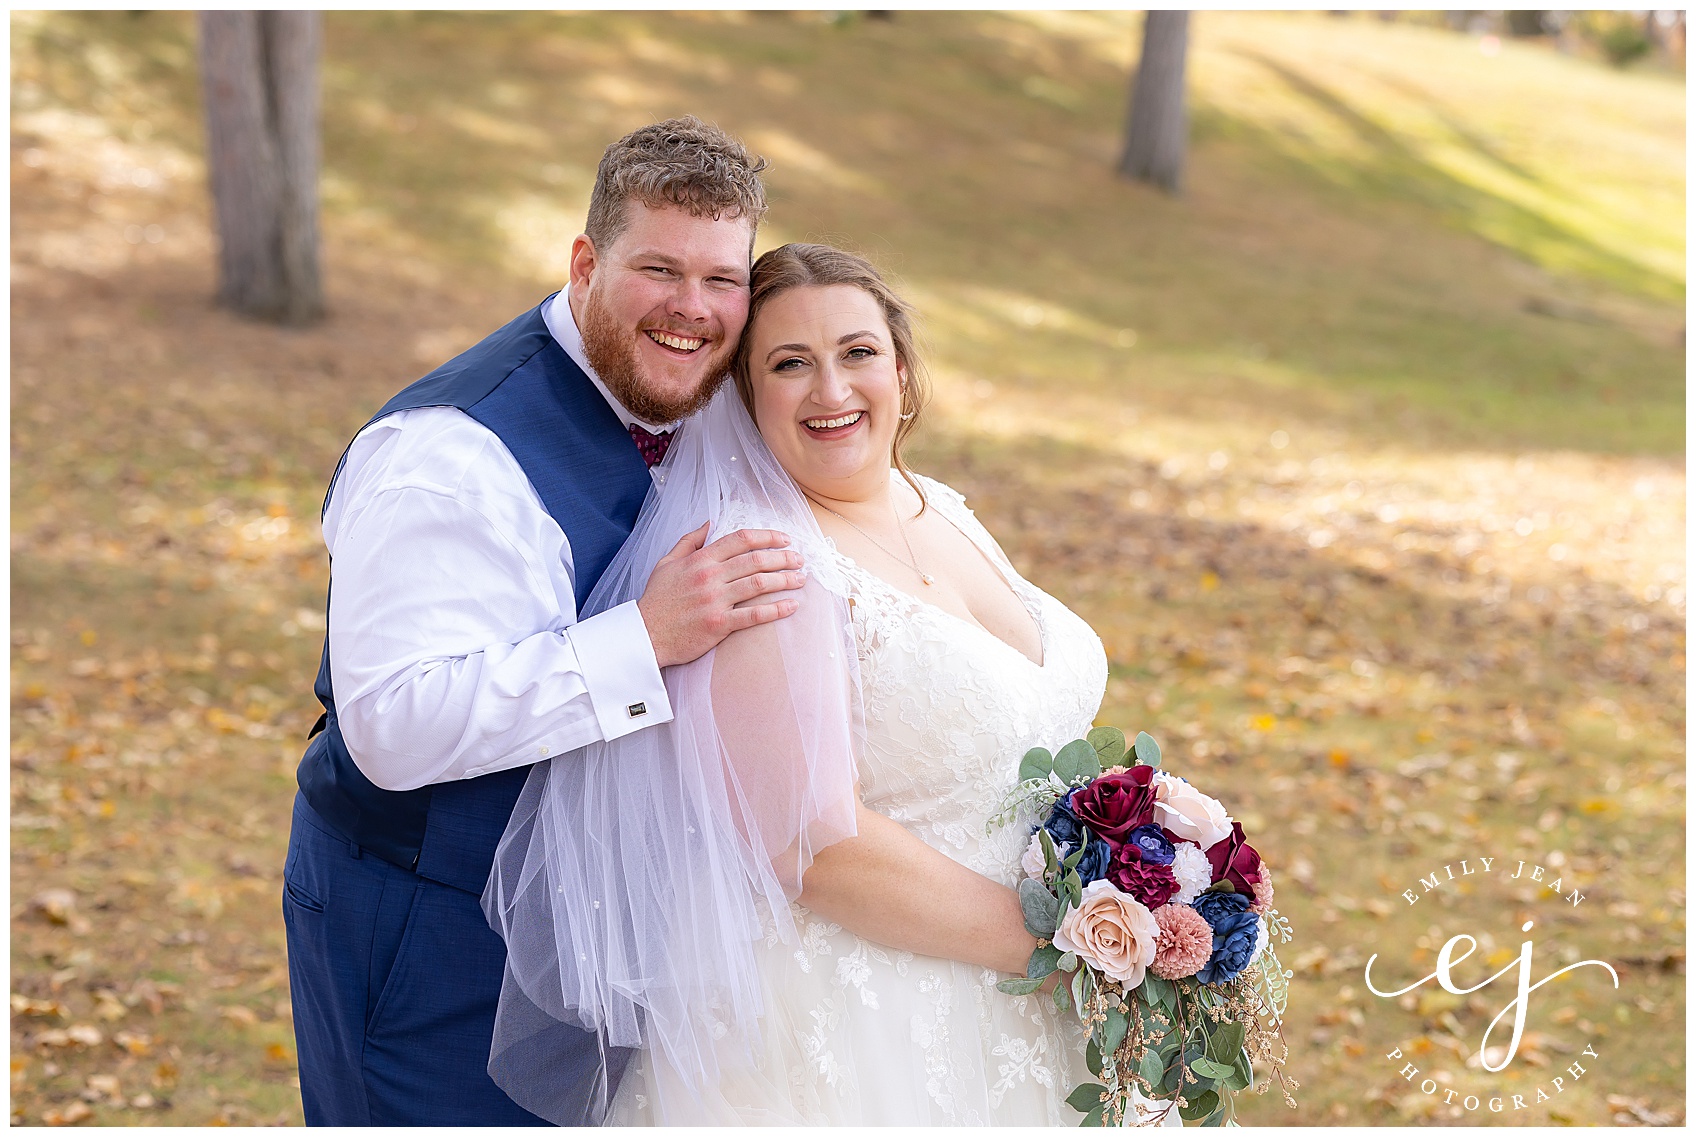 plus size bride and groom portraits autumn wedding at Myrick Park La Crosse Wisconsin burgundy and navy wedding